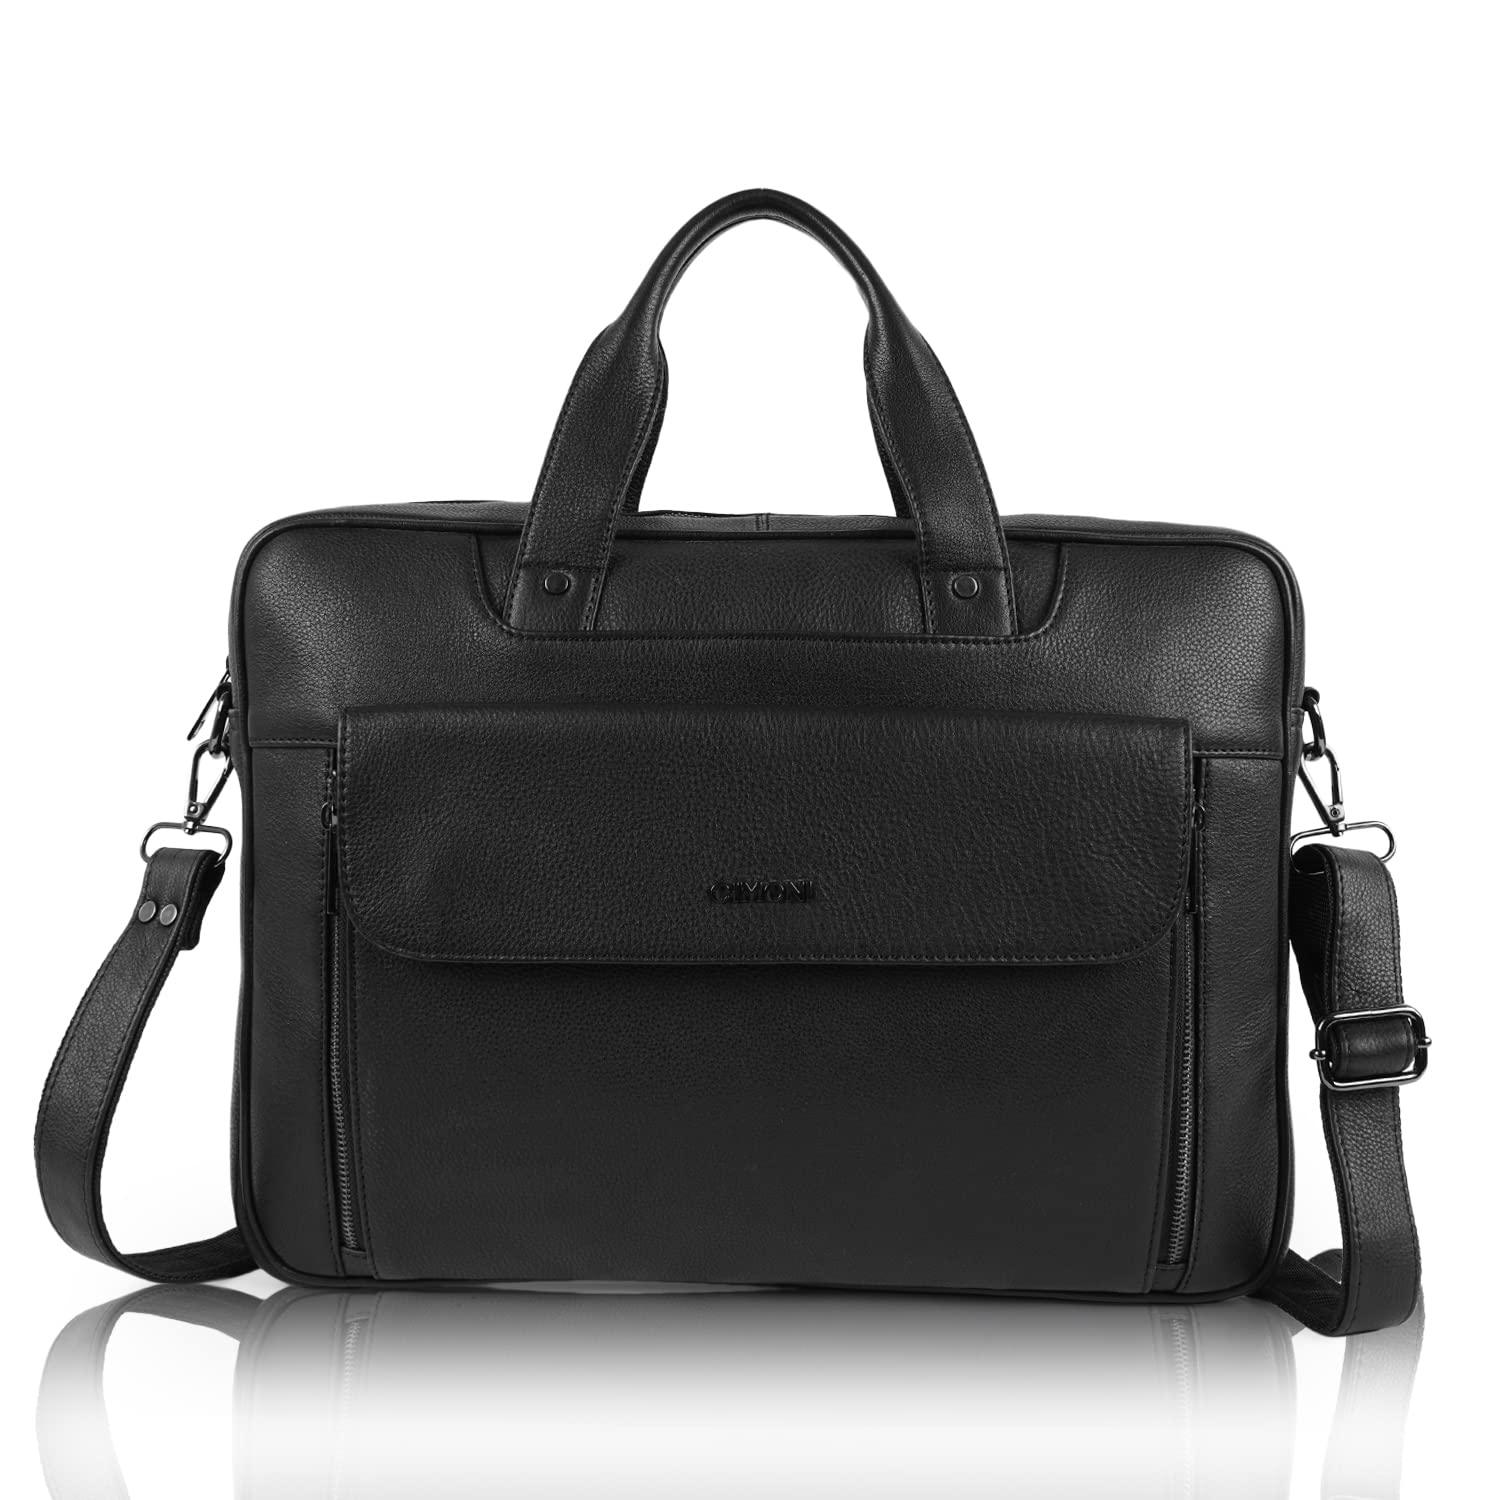 CIMONI® Synthetic Vegan Leather Bag Classic Top Handle Laptop Bag Handheld 15.6 Inch Water Resistant Briefcase Messenger Bag Carrying Handbag (Color - Black)